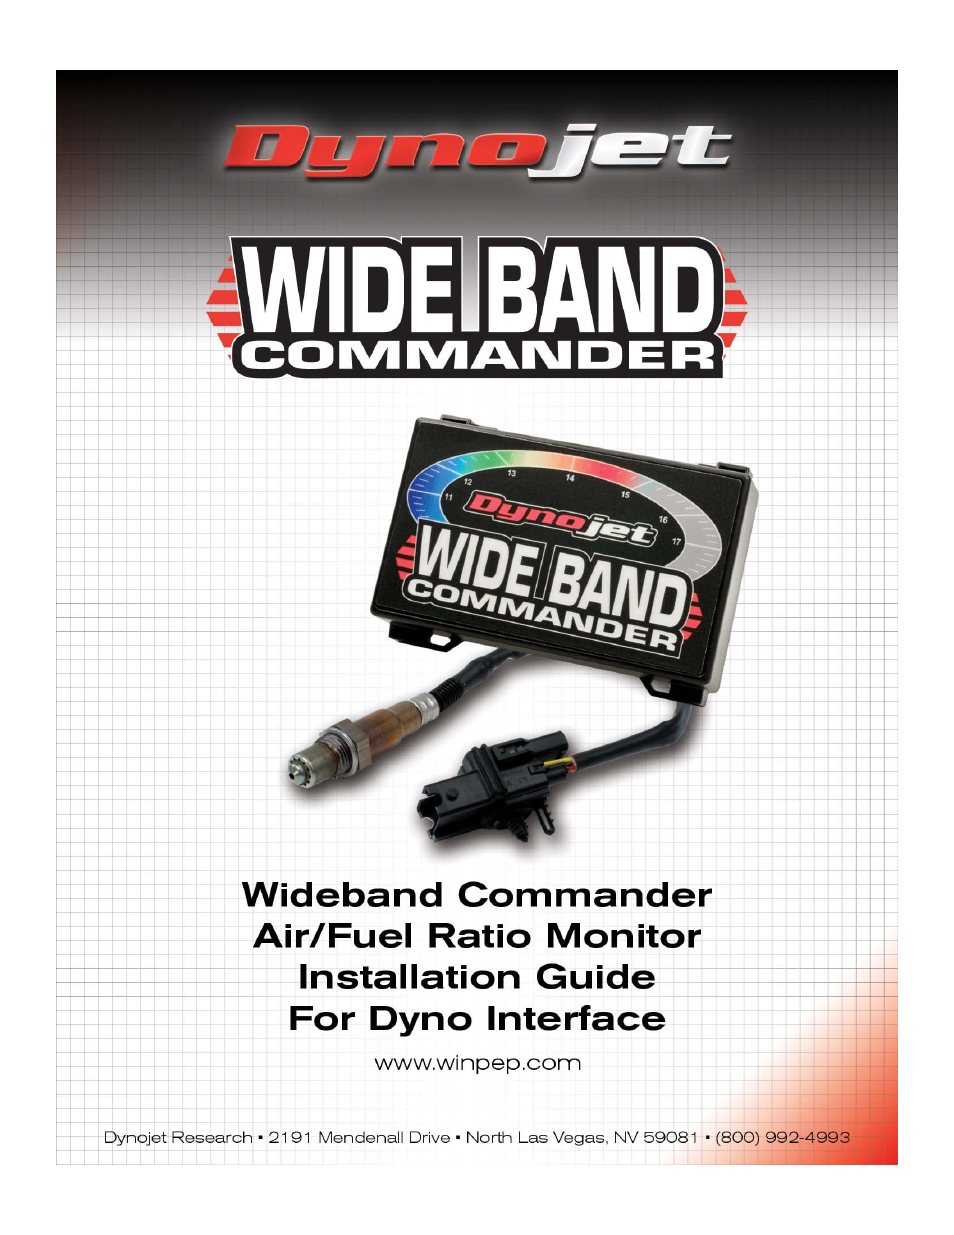 Wideband Commander Air/Fuel Ratio Monitor